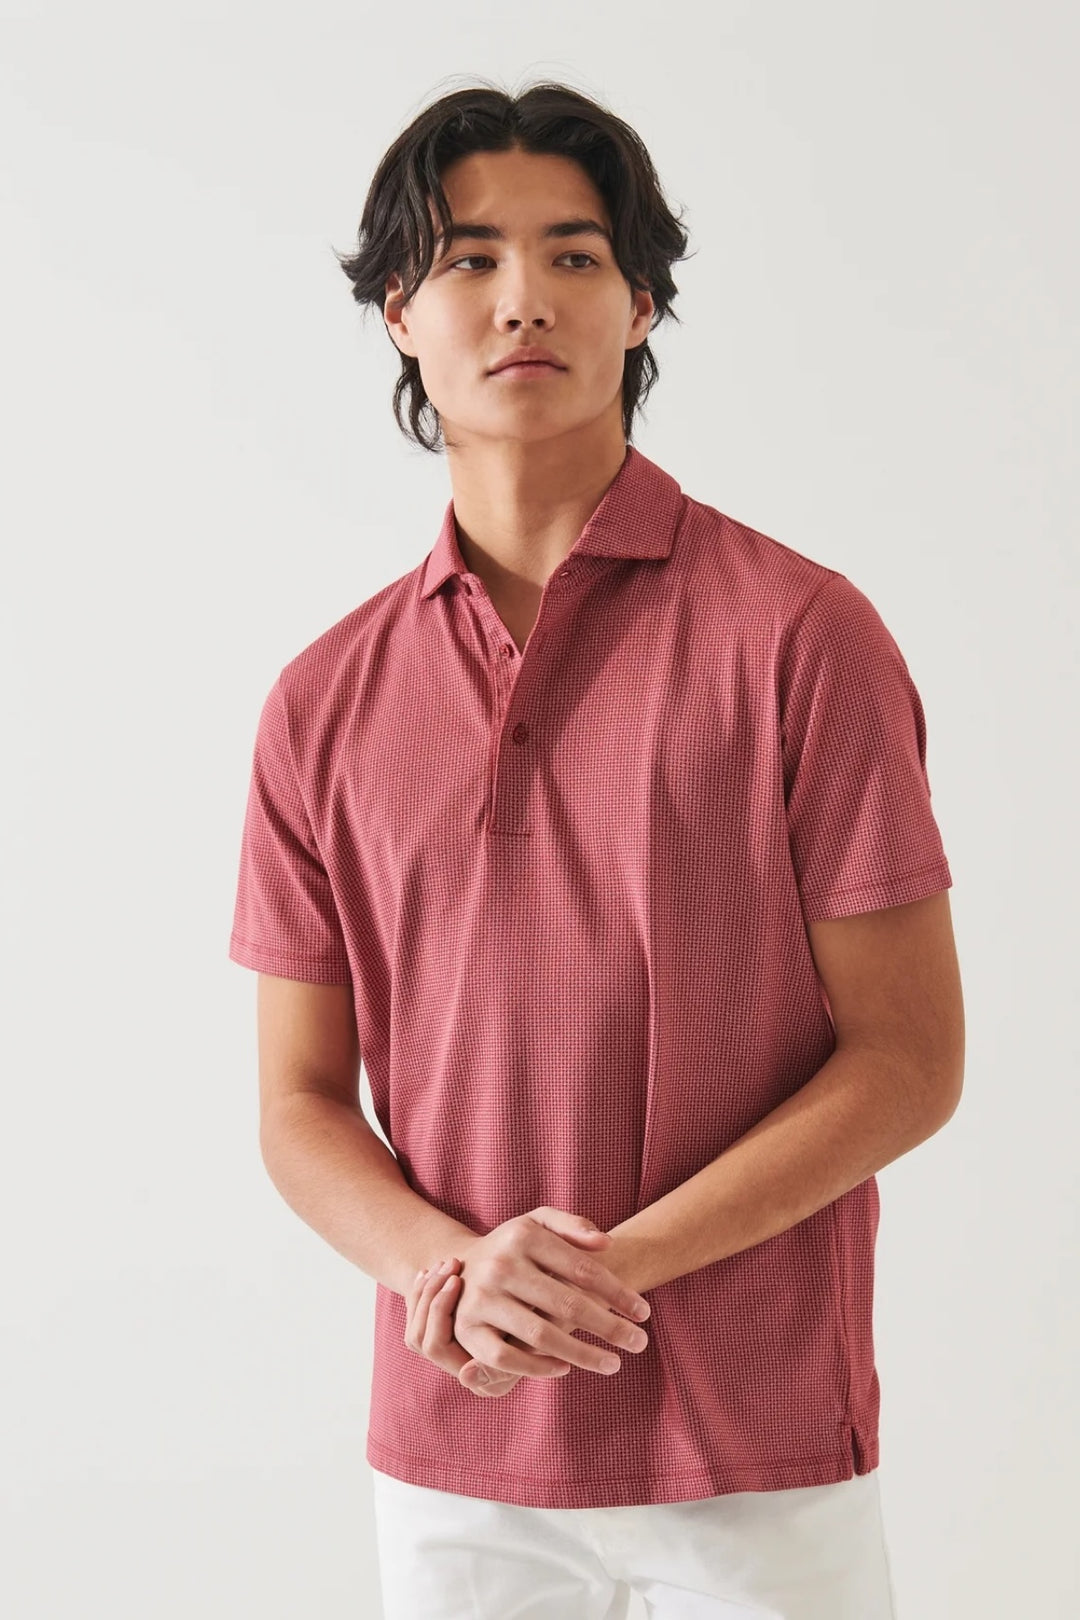 Printed stretch pima cotton polo shirt